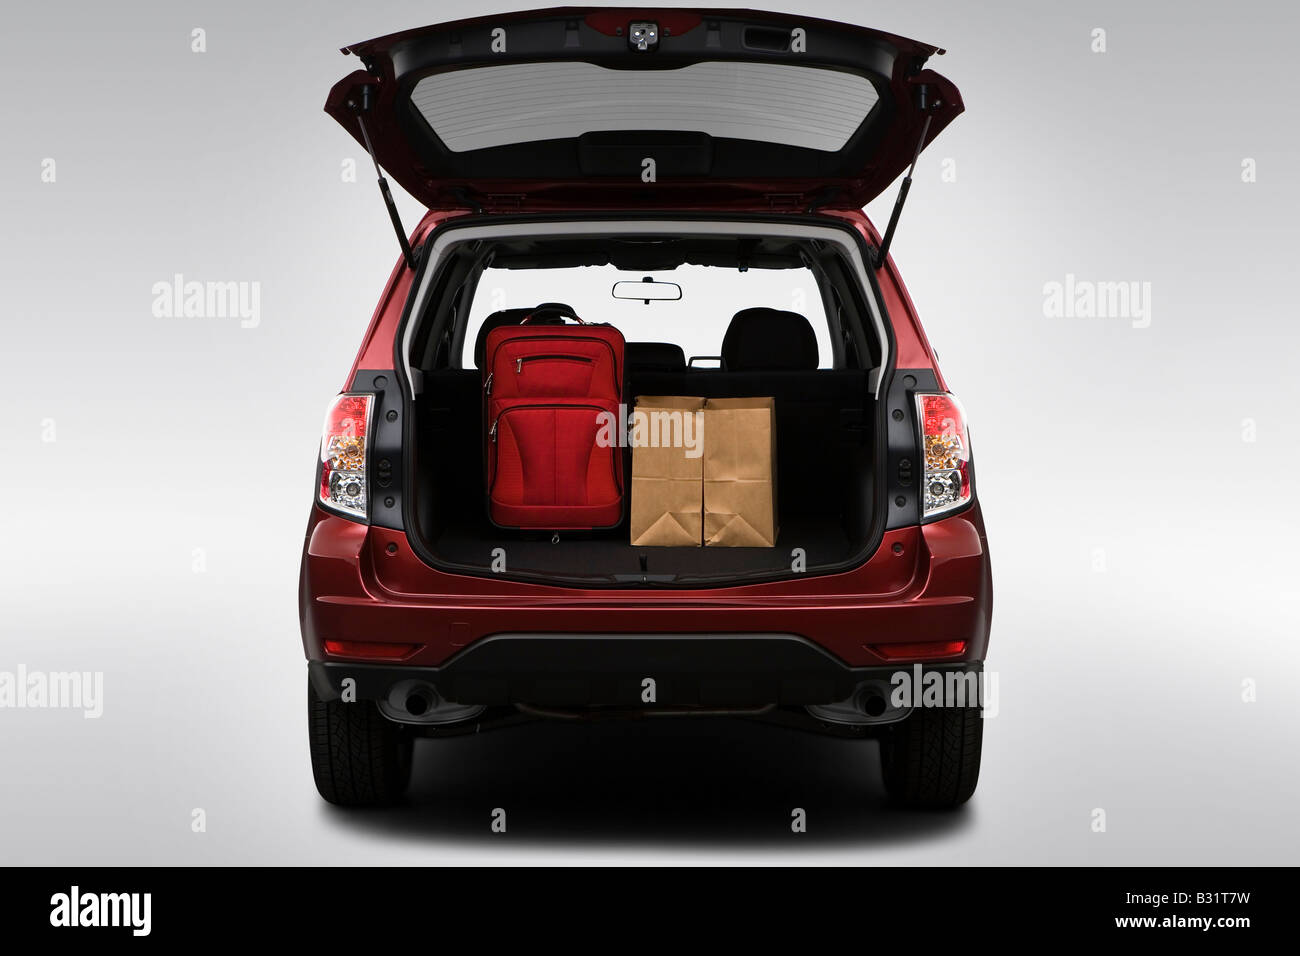 2009 Subaru Forester 2.5 X Premium rot - Stamm Requisiten Stockfoto